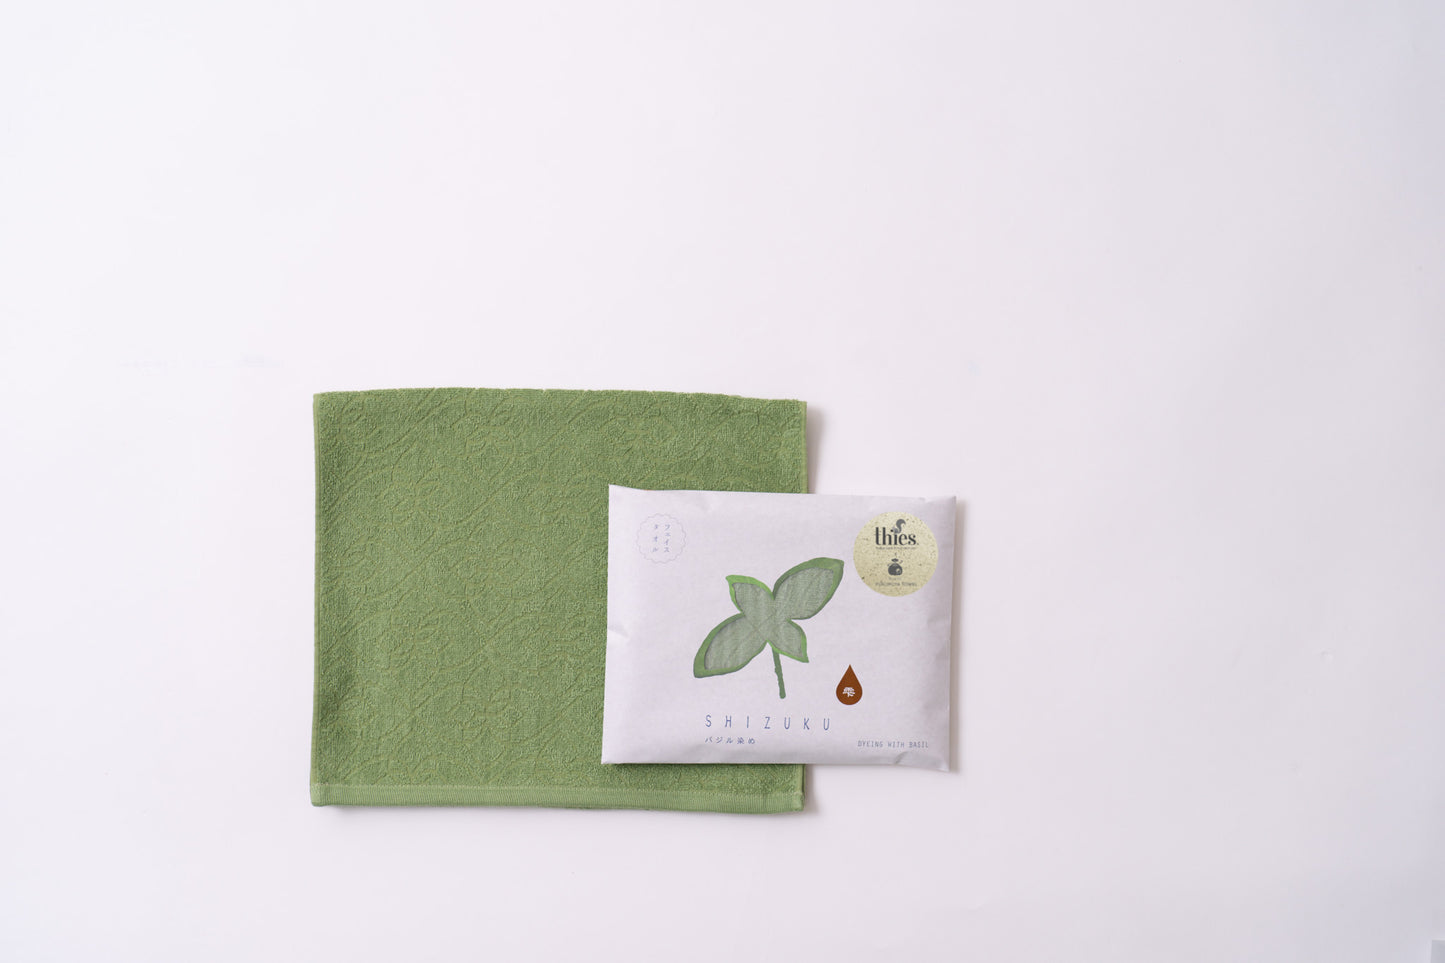 thies 1856 ® x Fukuroya Shizuku Guest & Face Towel natural dyed basil green